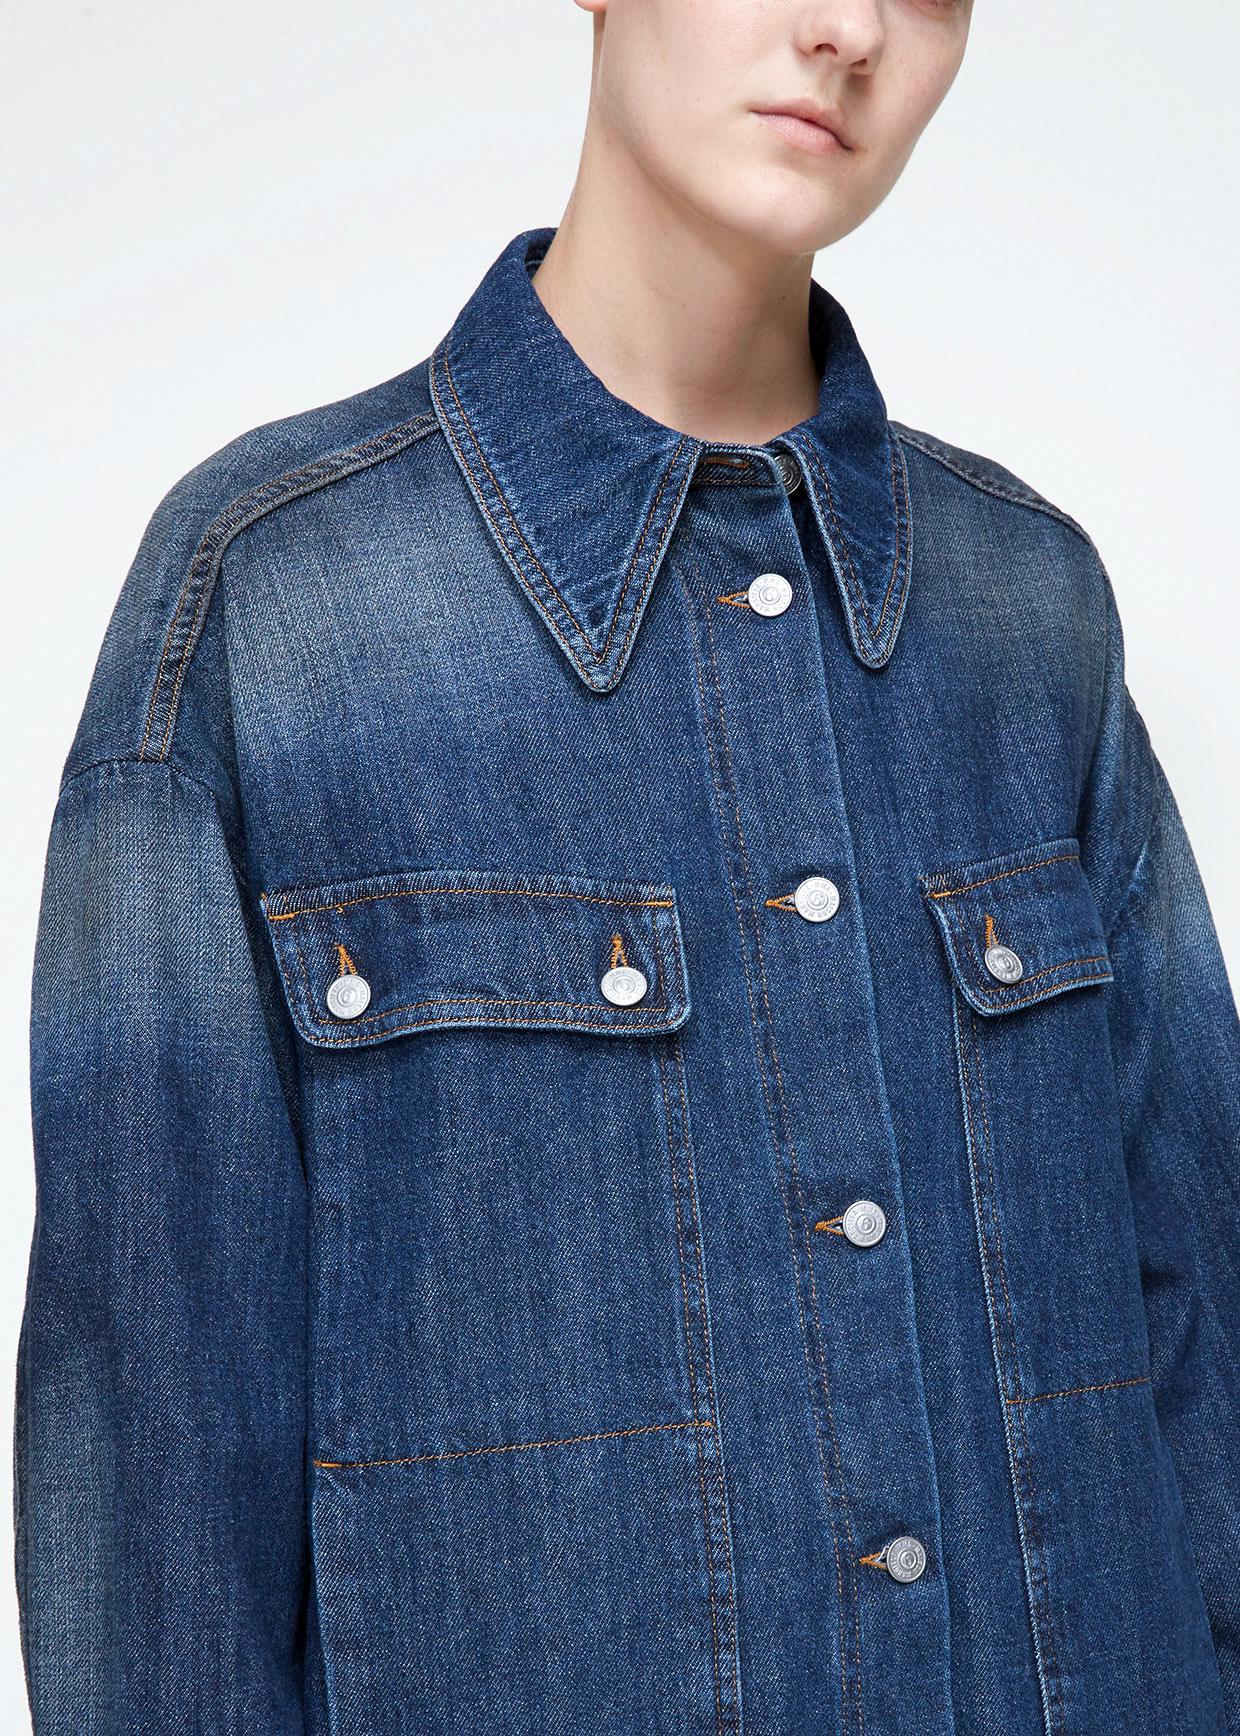 MM6 by Maison Martin Margiela Denim Jacket Tunic in Blue - Lyst